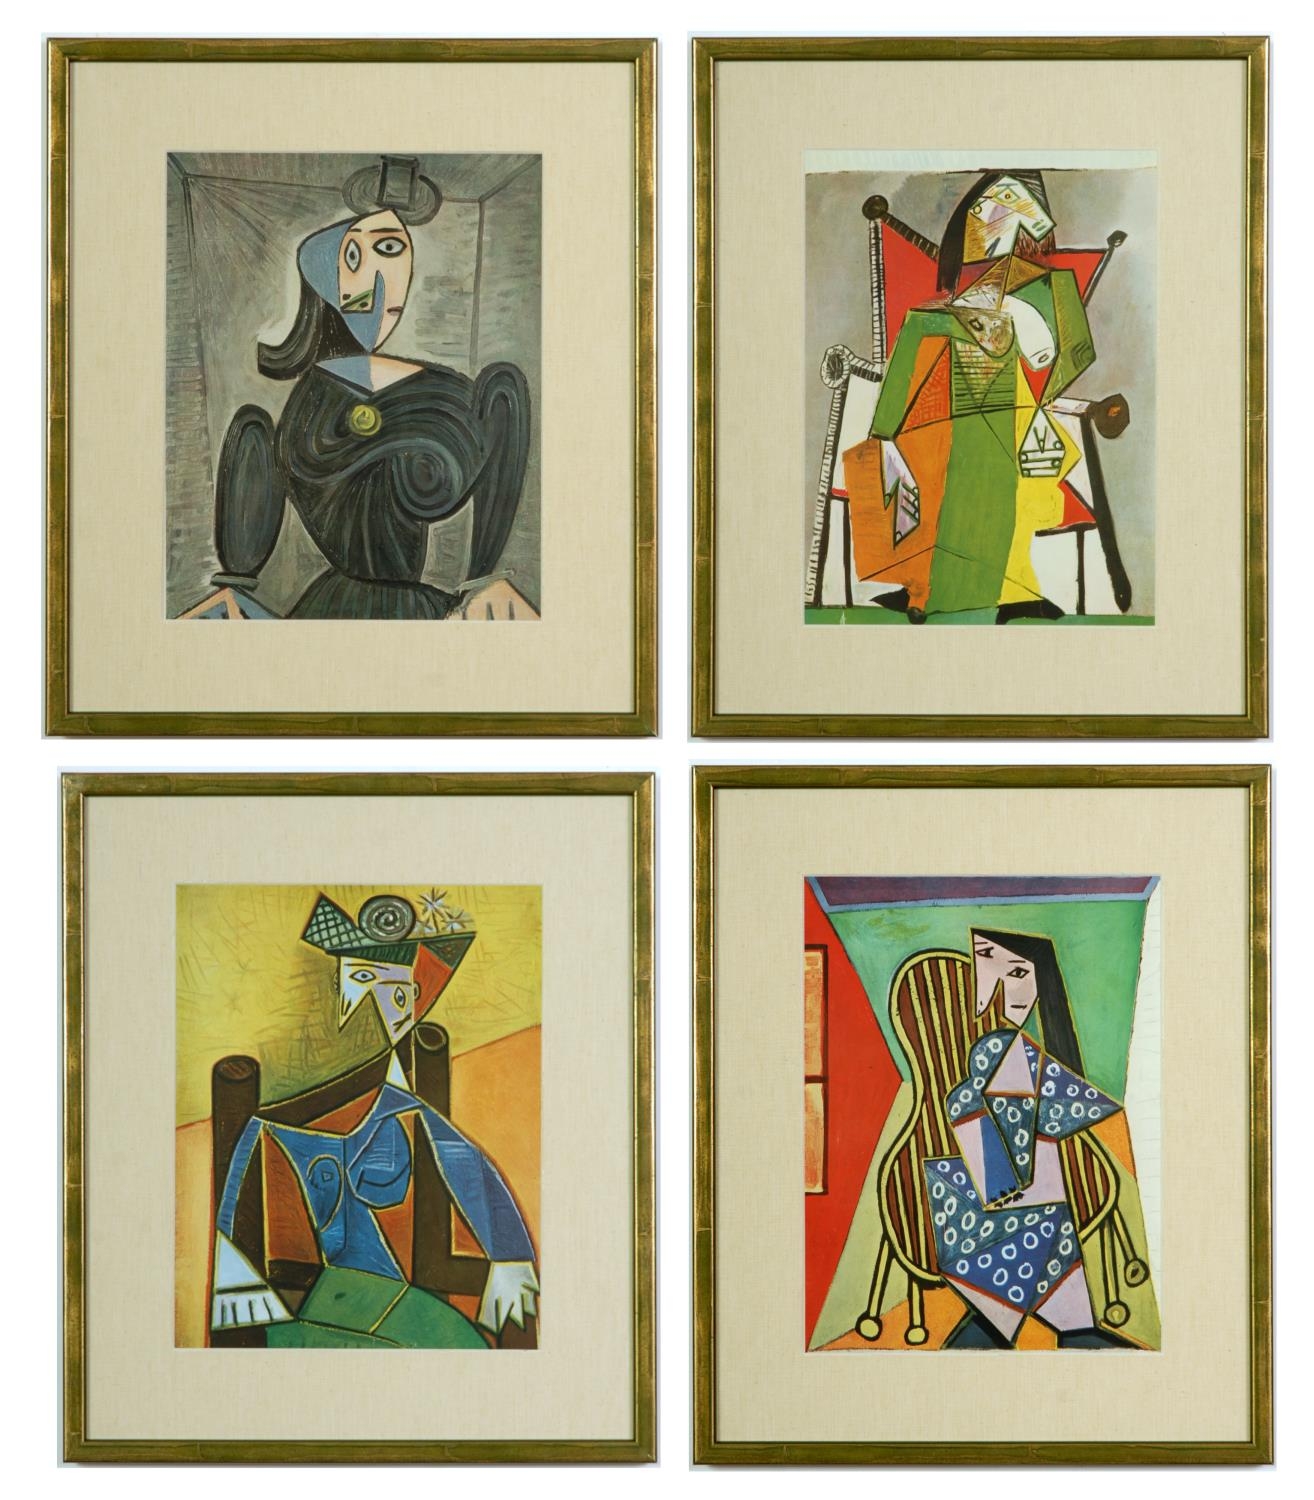 AFTER PABLO PICASSO, Femme Assise, a set of four off set lithographs, linen moutboard, various